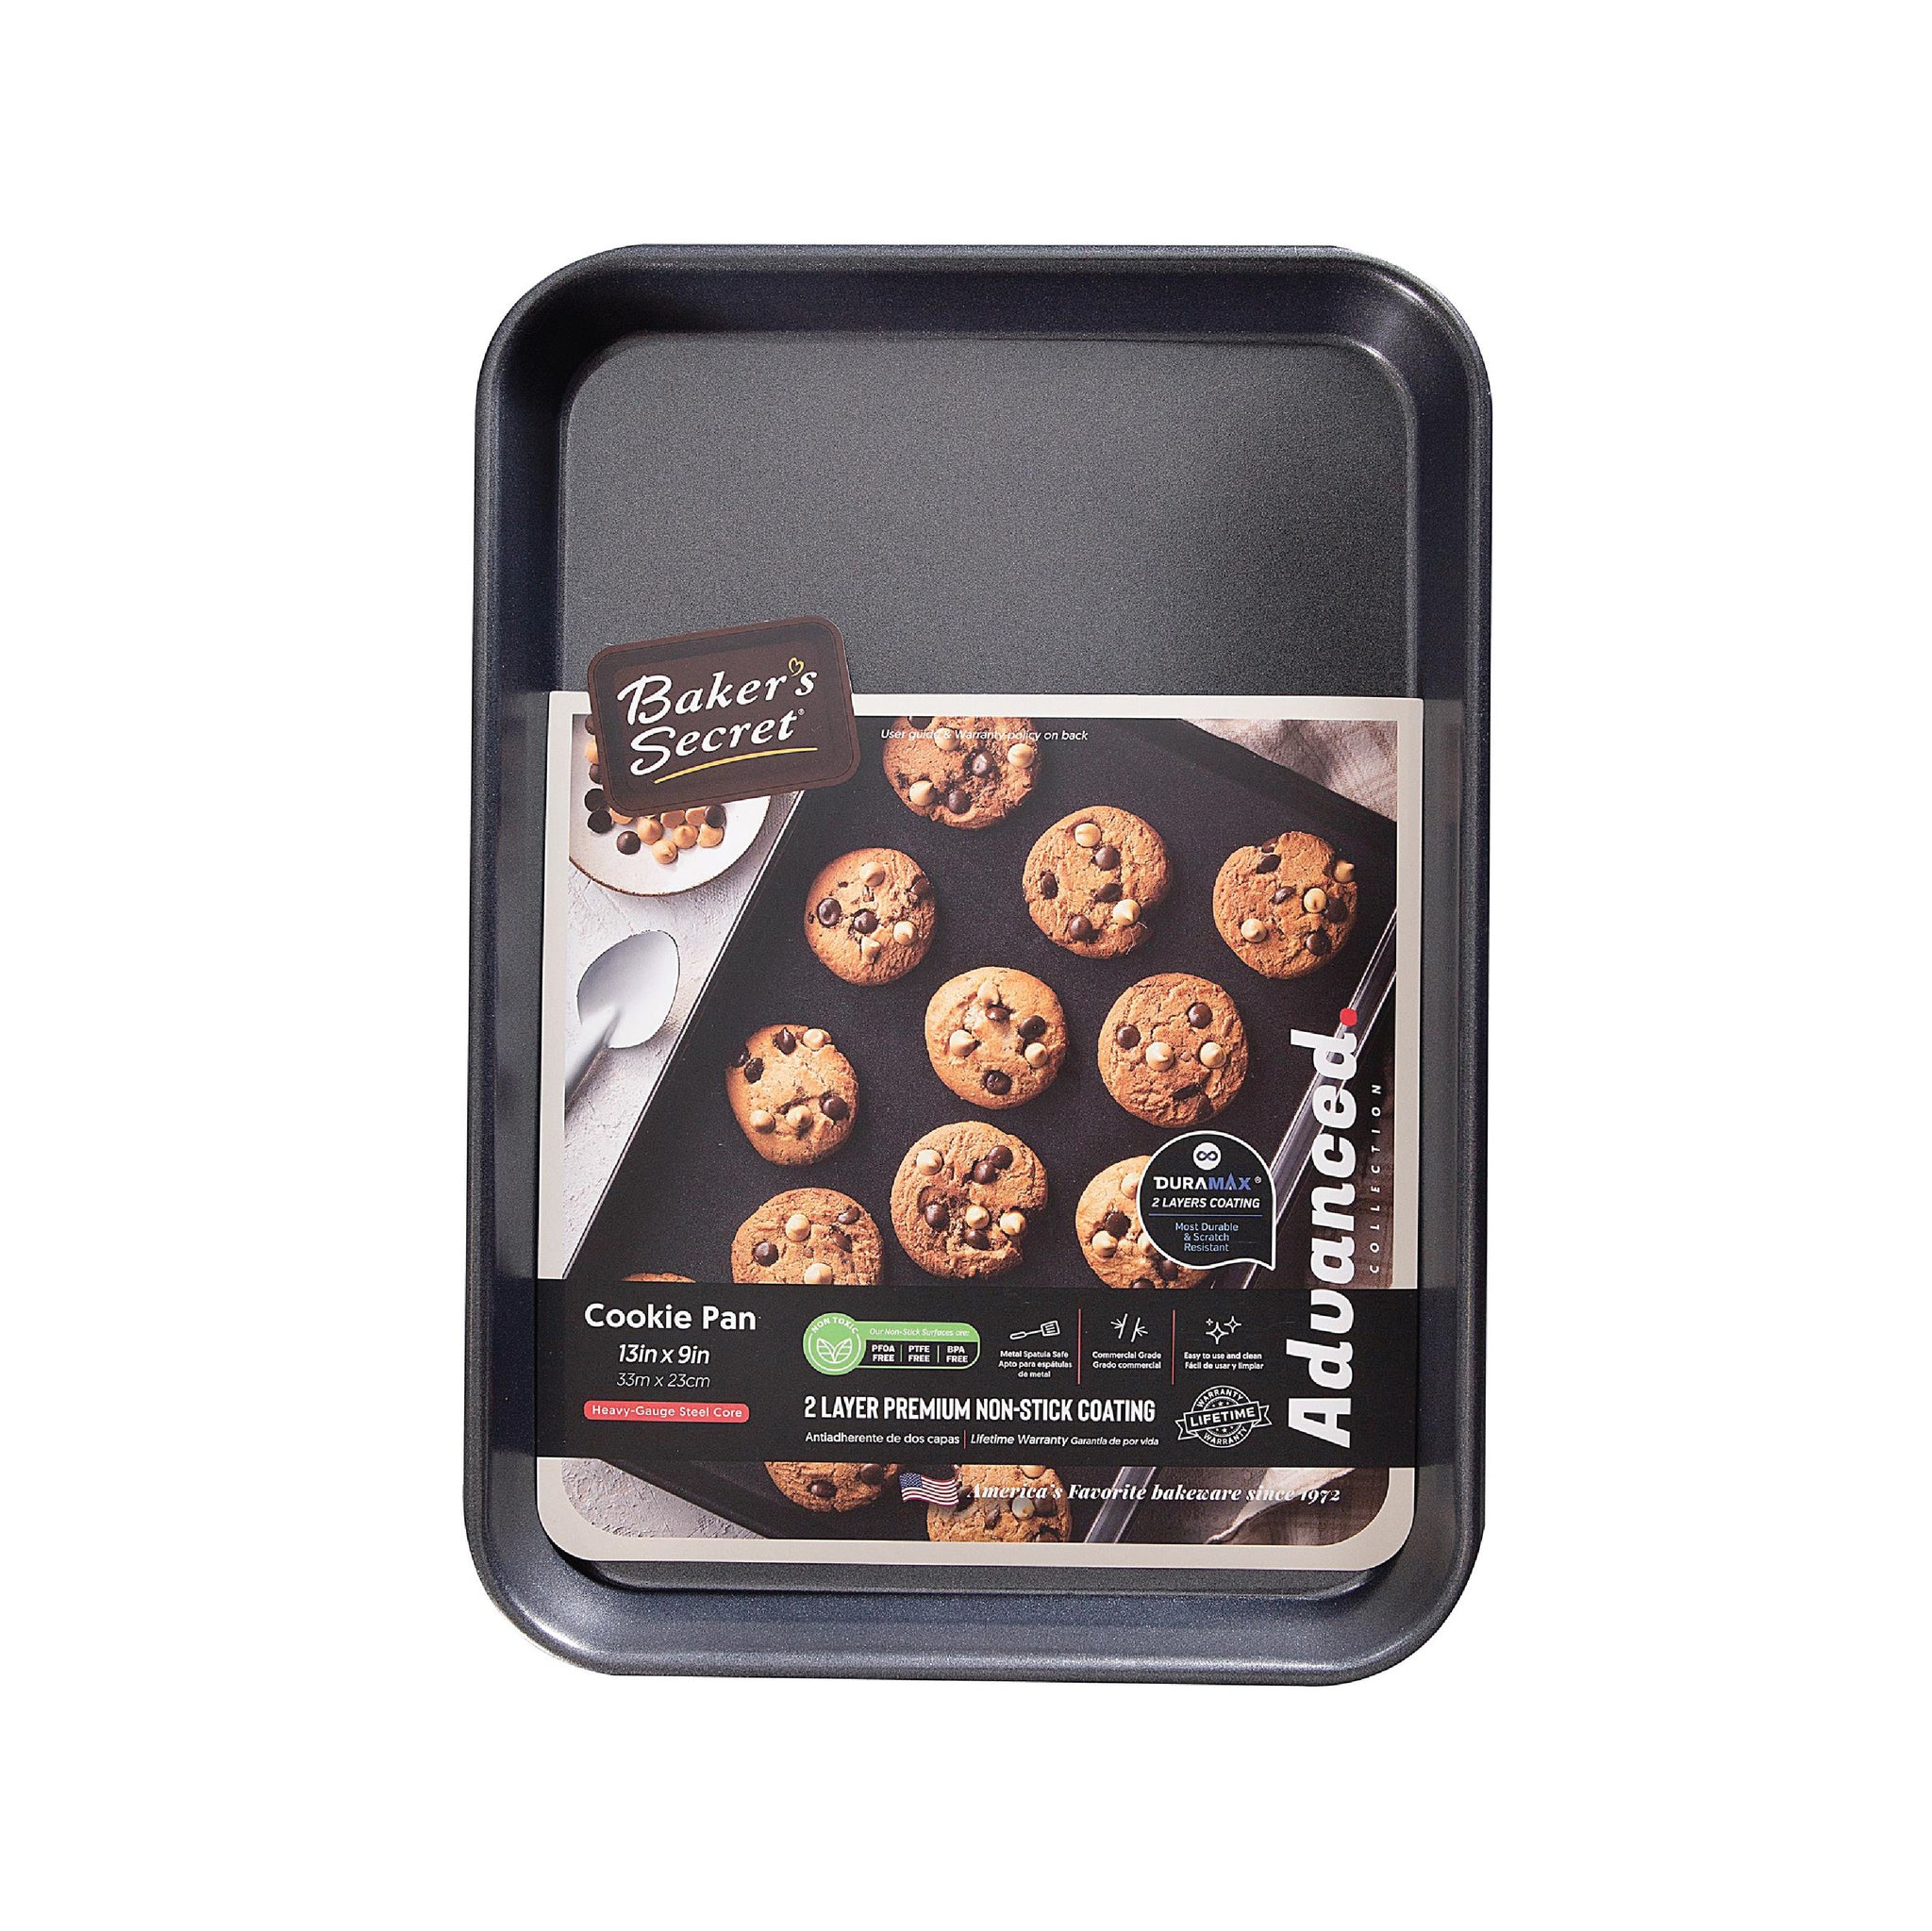 Cookie Sheet 13" x 9"  Baking & Cookie Sheets - Baker's Secret